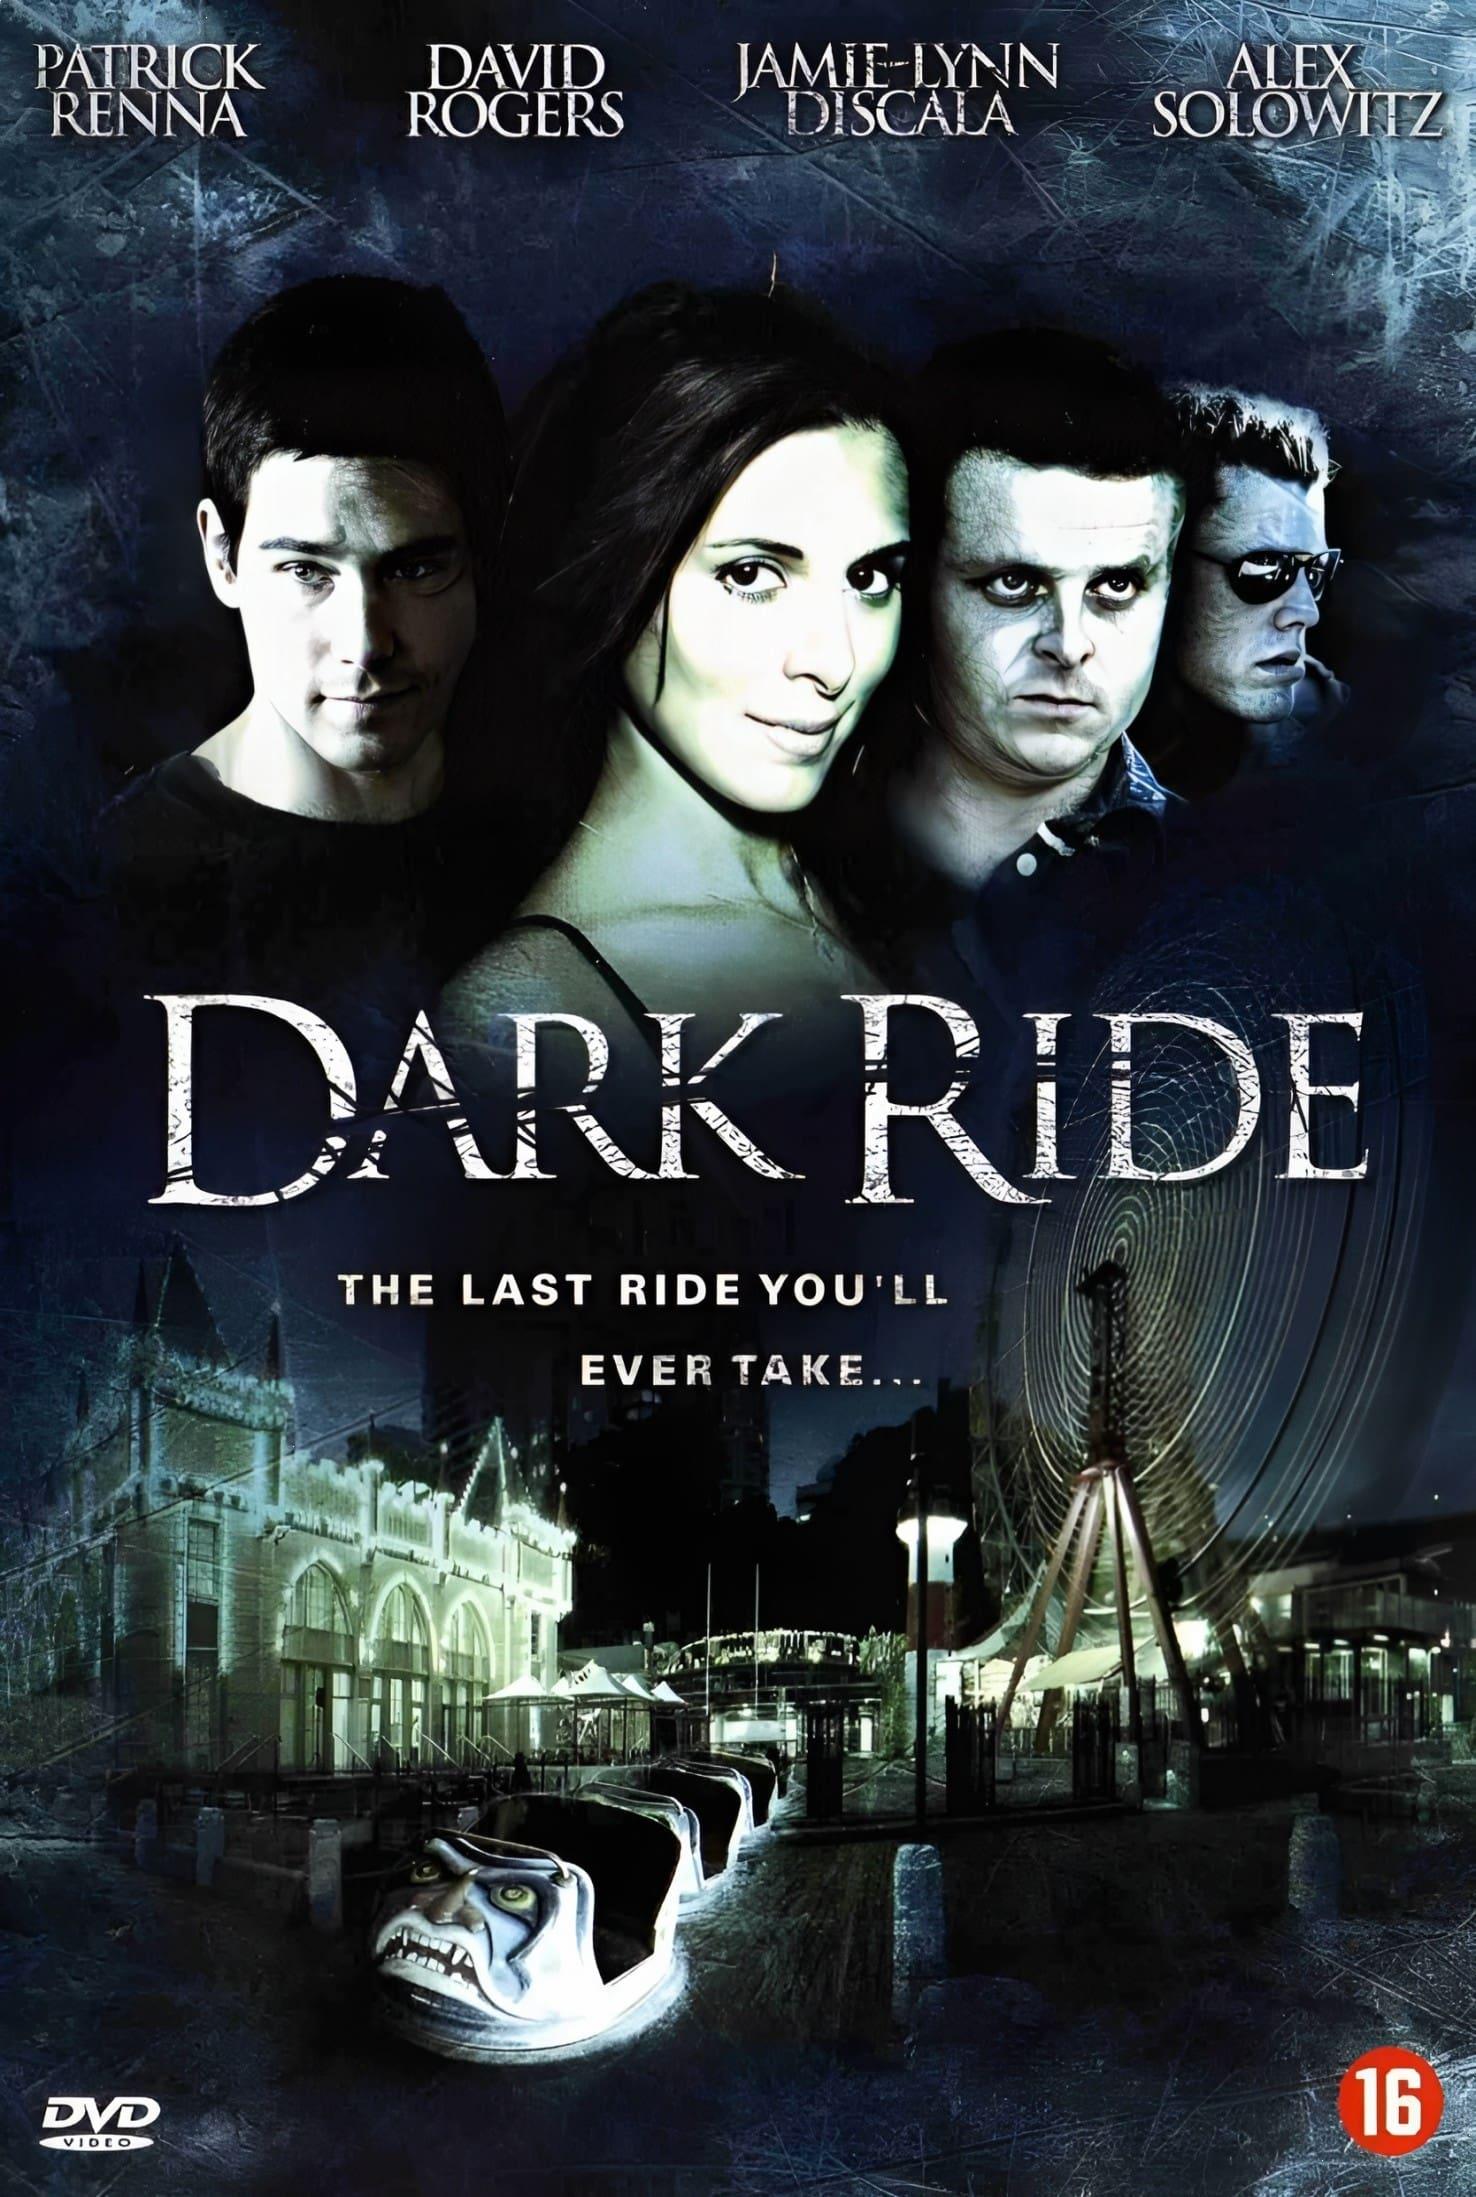 Dark Ride poster